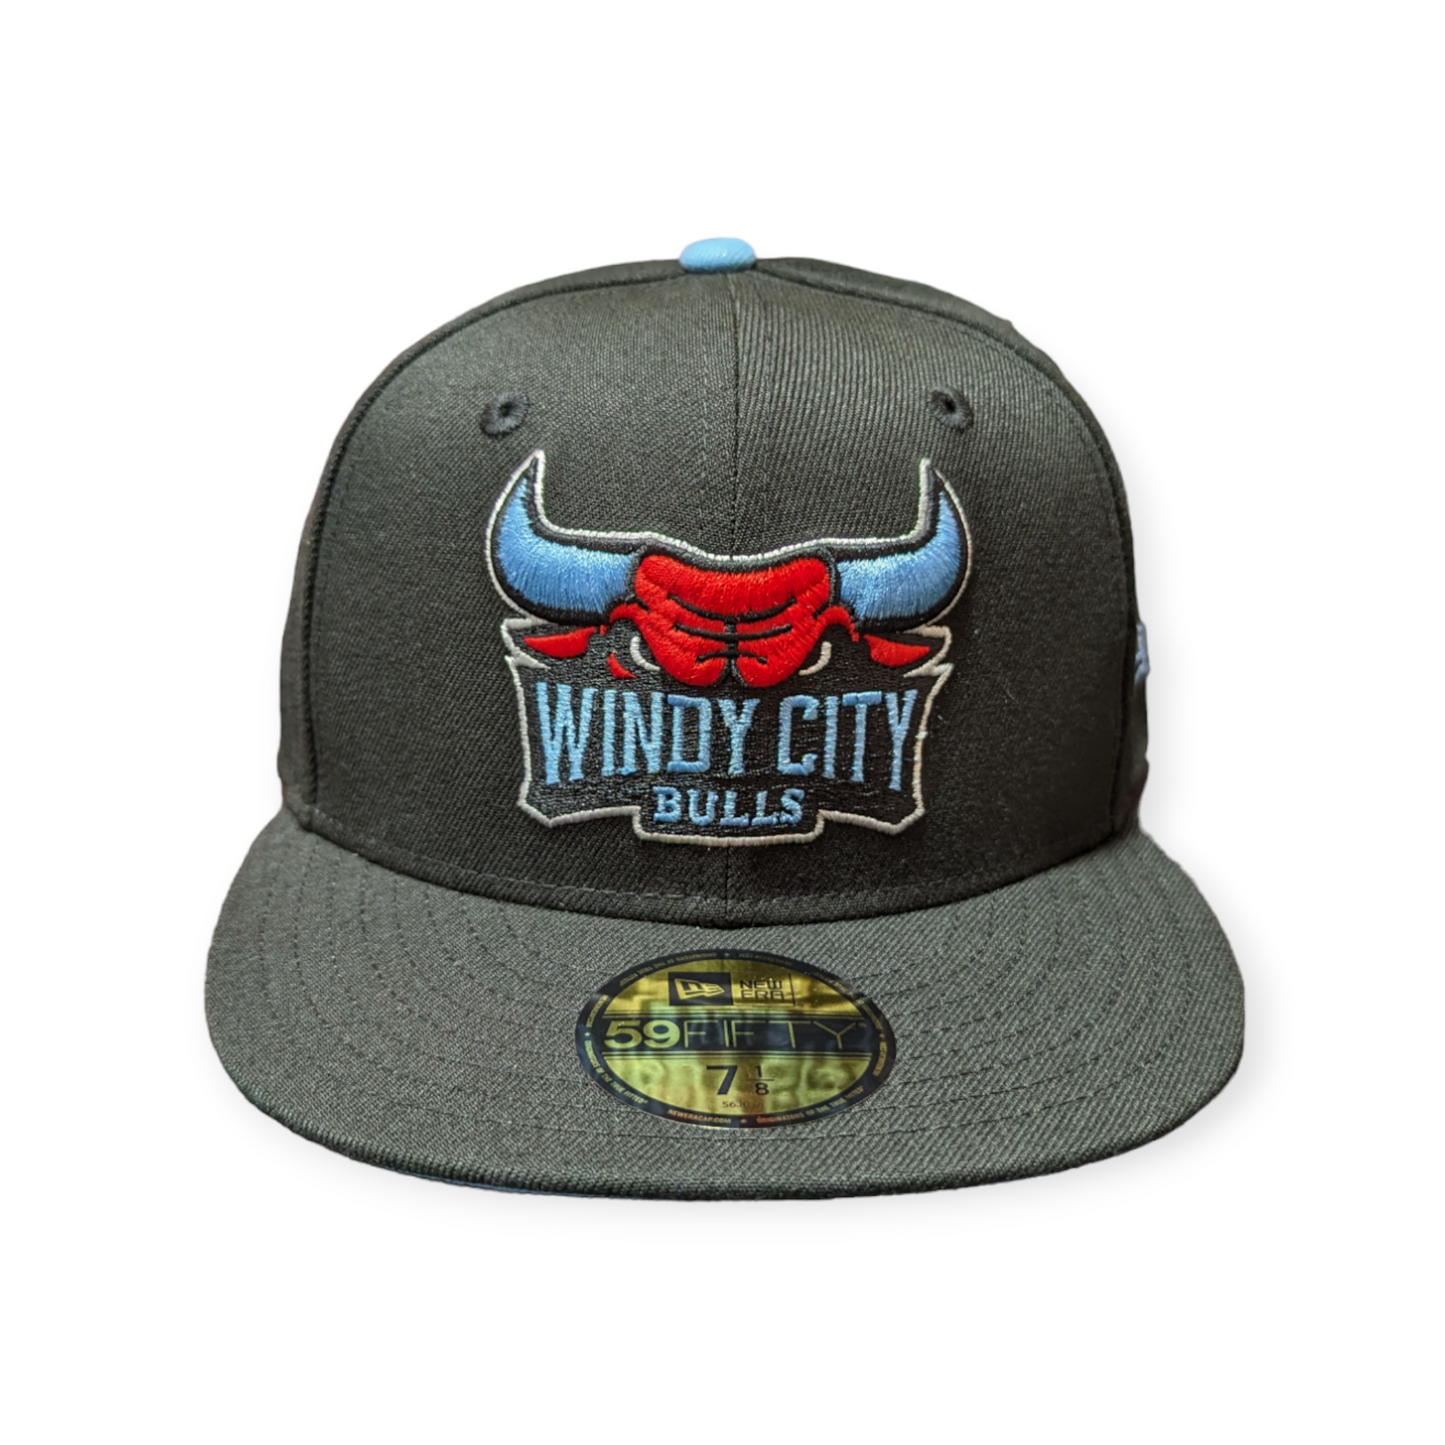 Windy City Bulls New Era Black Sky 59FIFTY Fitted Hat